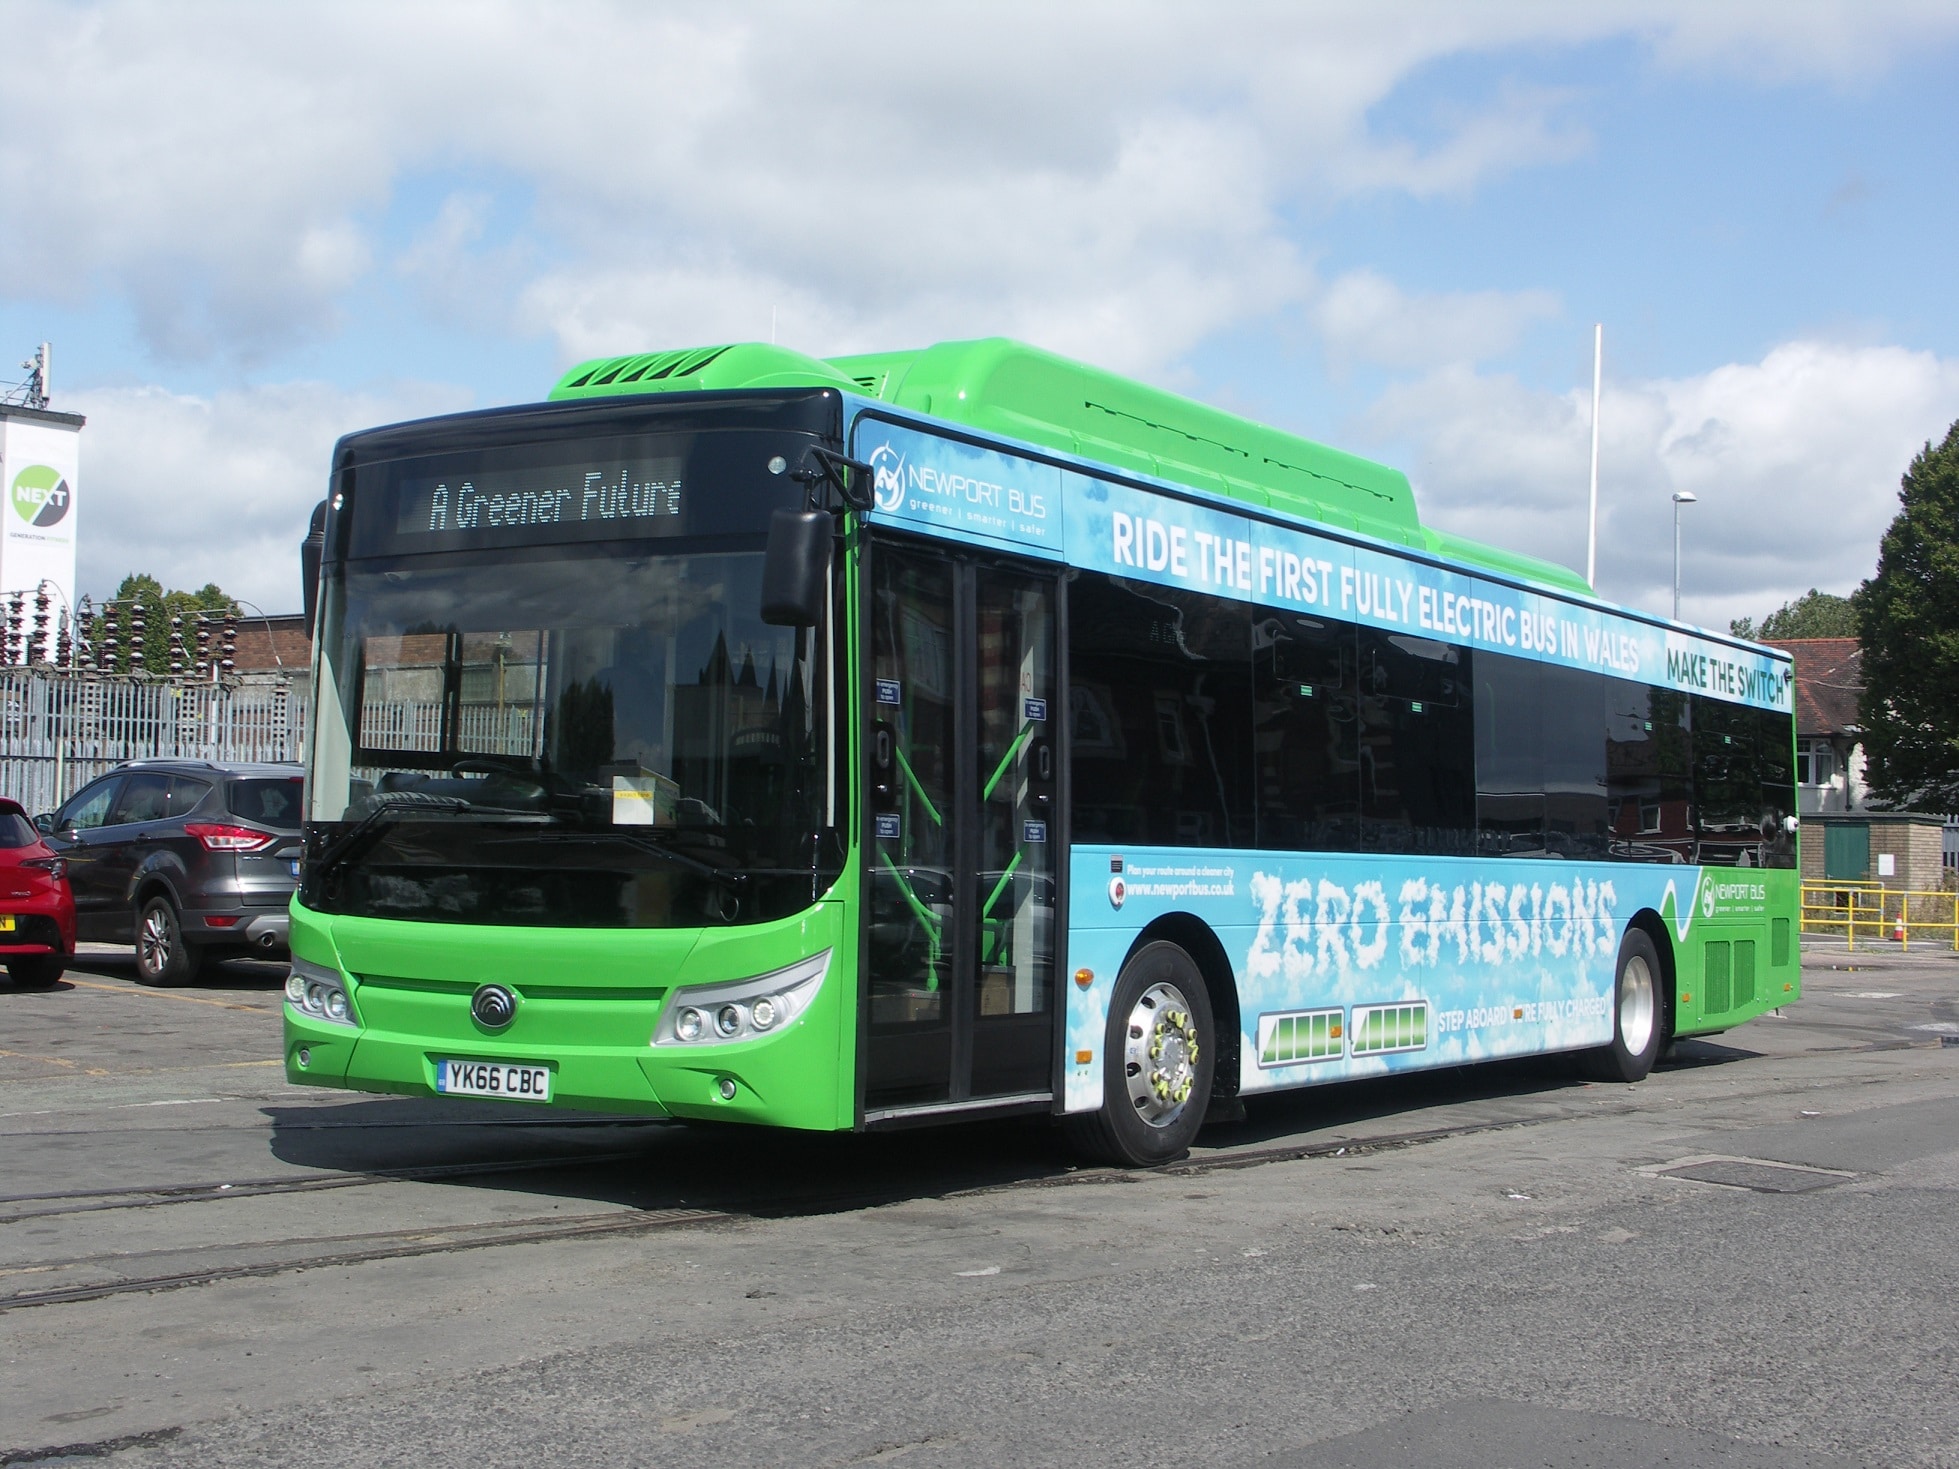 Bus franchising in Wales legislation